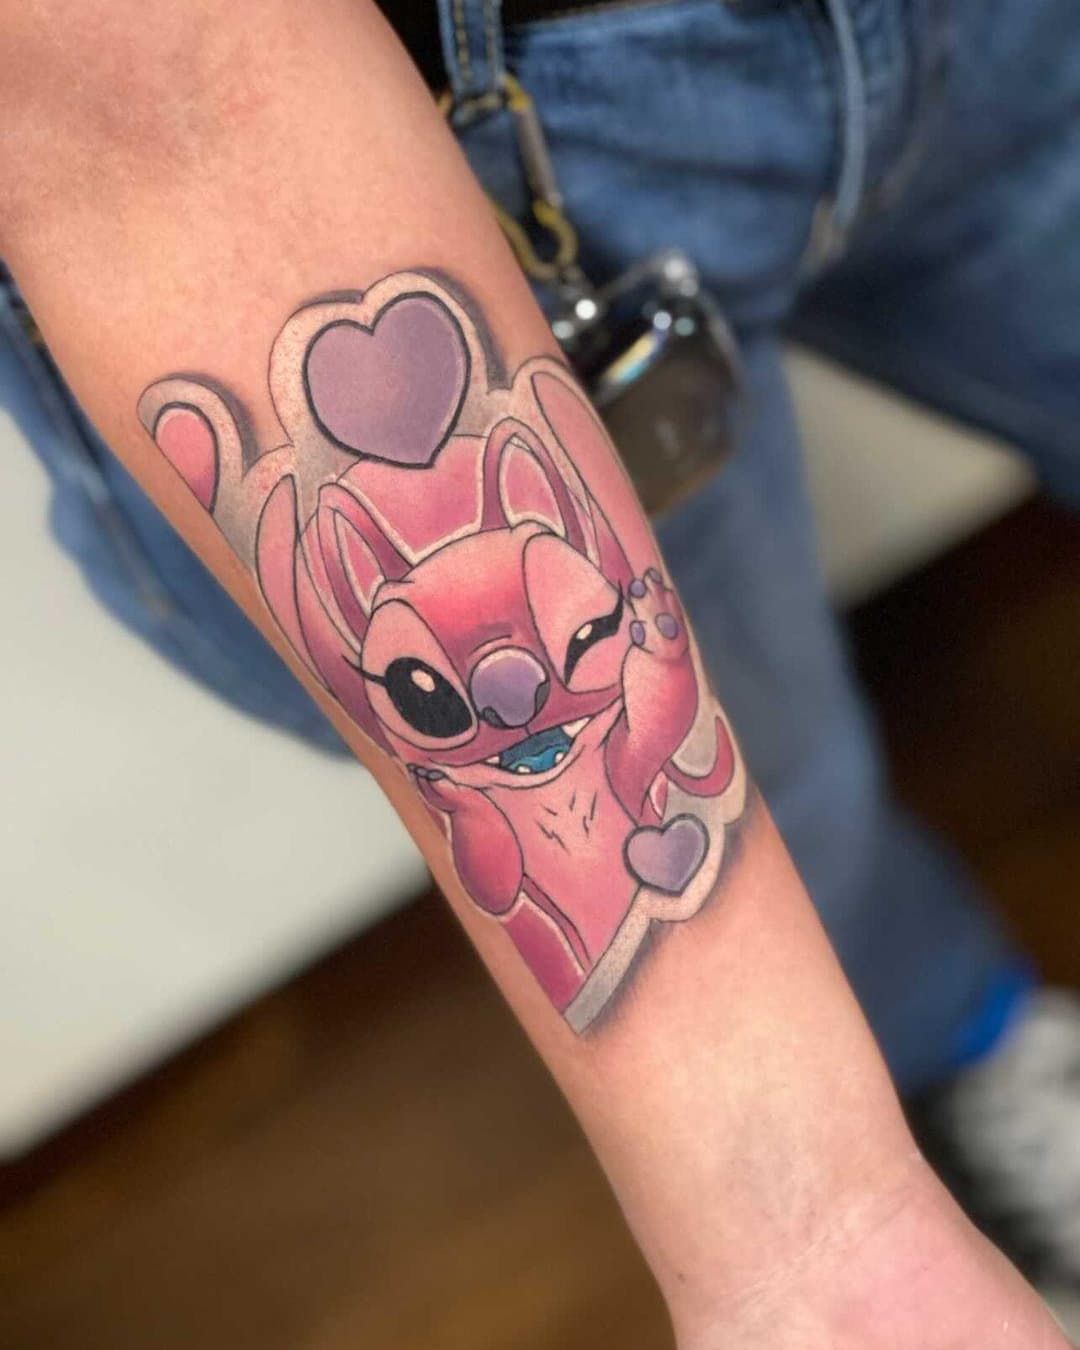 Shaggi on X Everyones favourite animated alien rabbitdog Matching Stitch  tattoos for two friends  httpstcoMD38F1Qhko  X